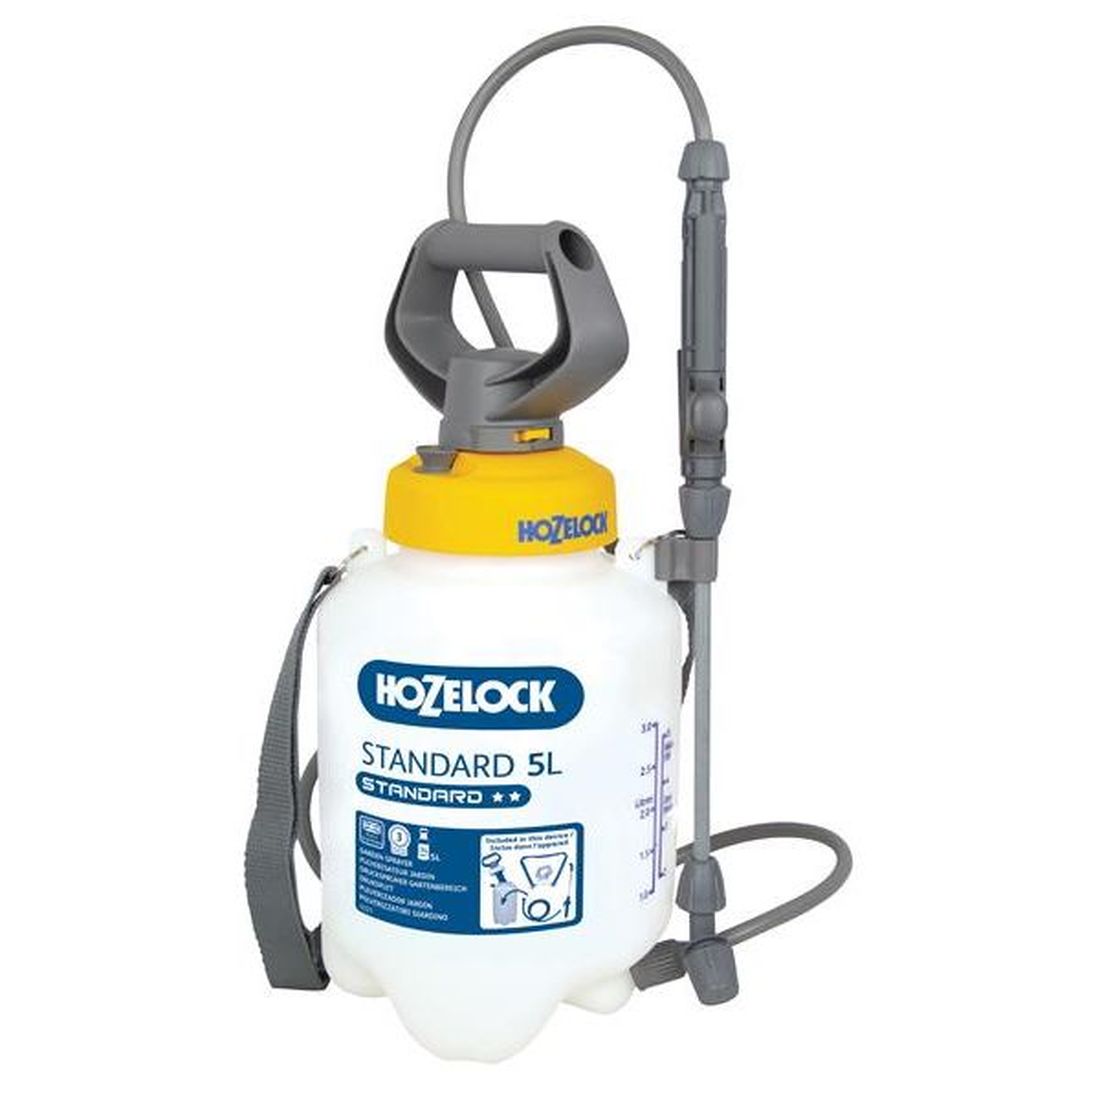 Hozelock 4230 Standard Pressure Sprayer 5 litre                                          